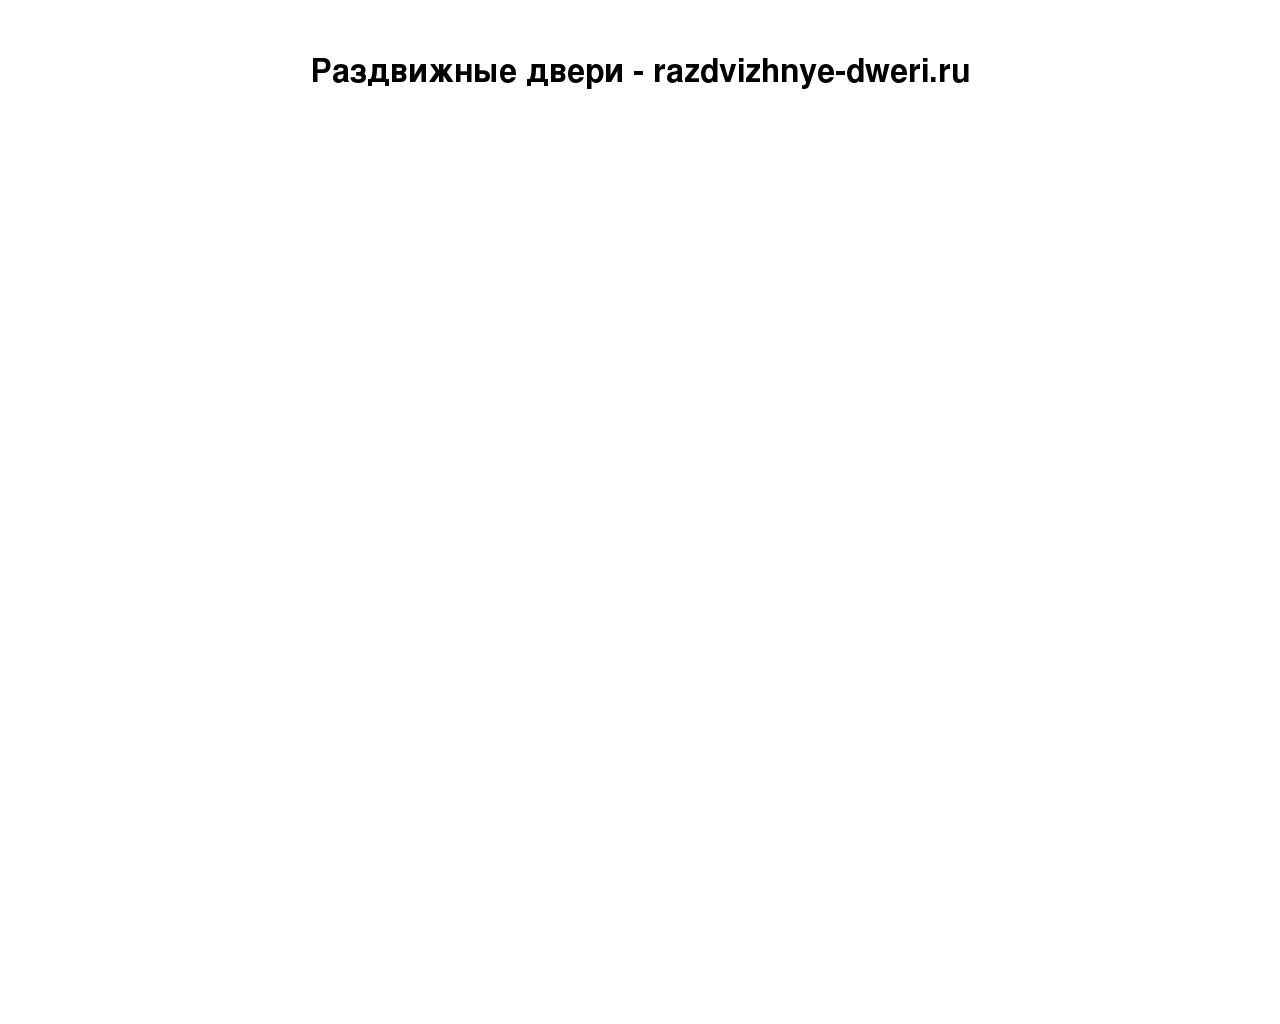 Изображение сайта razdvizhnye-dweri.ru в разрешении 1280x1024